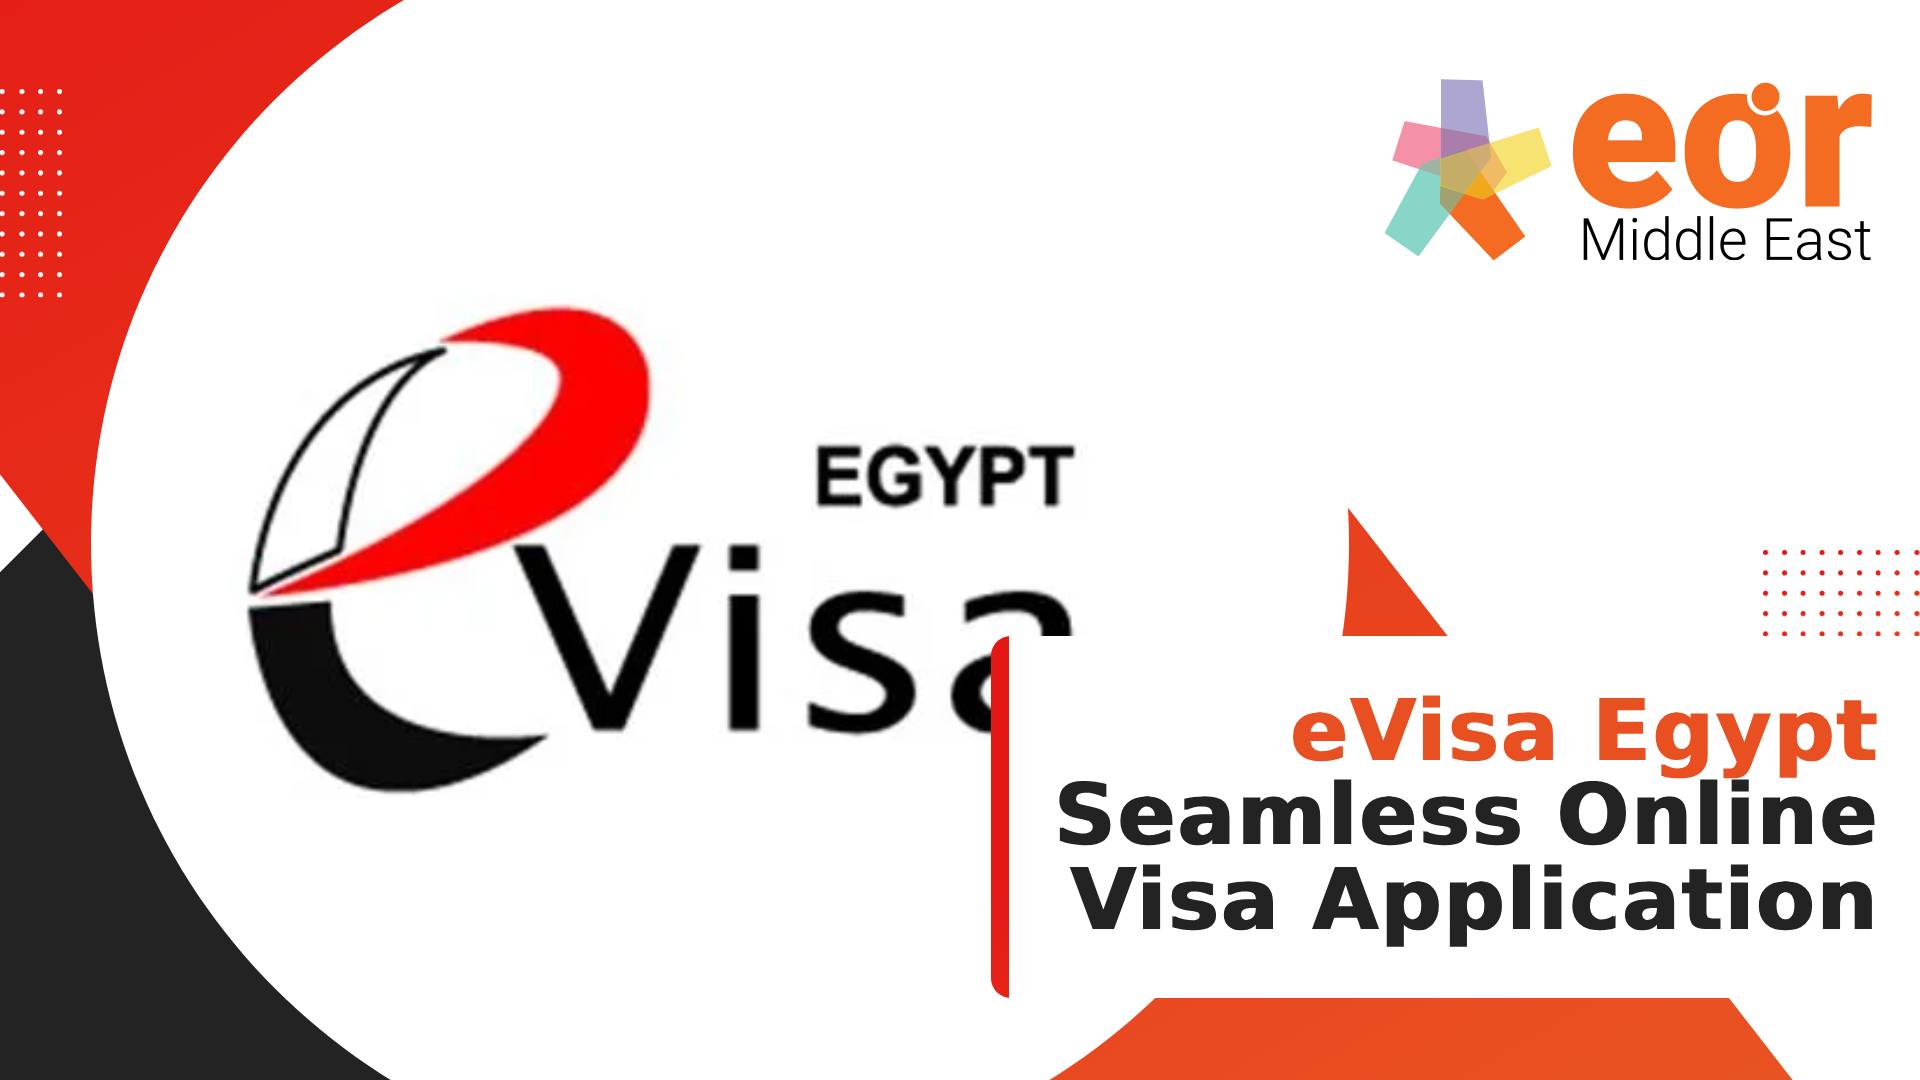 eVisa-Egypt-Seamless-Online-Visa-Application-Process.jpg